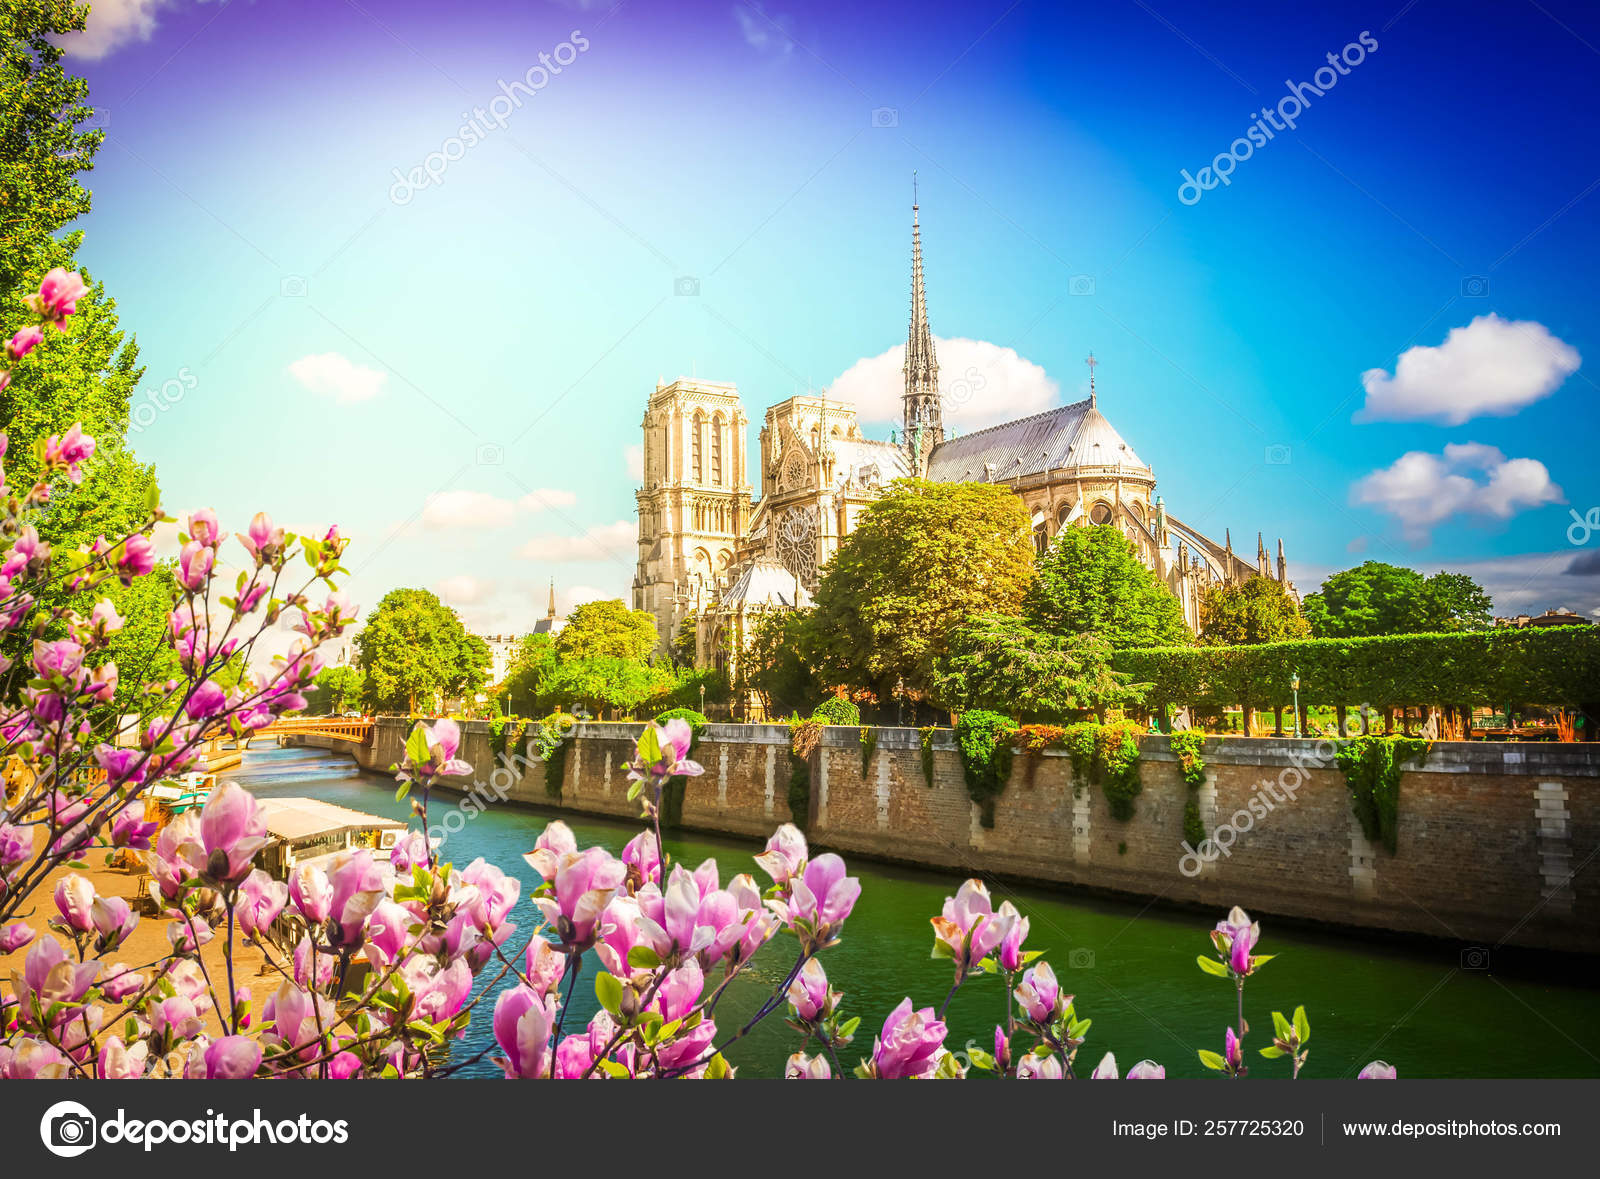 https://st4.depositphotos.com/1038919/25772/i/1600/depositphotos_257725320-stock-photo-notre-dame-cathedral-paris-france.jpg